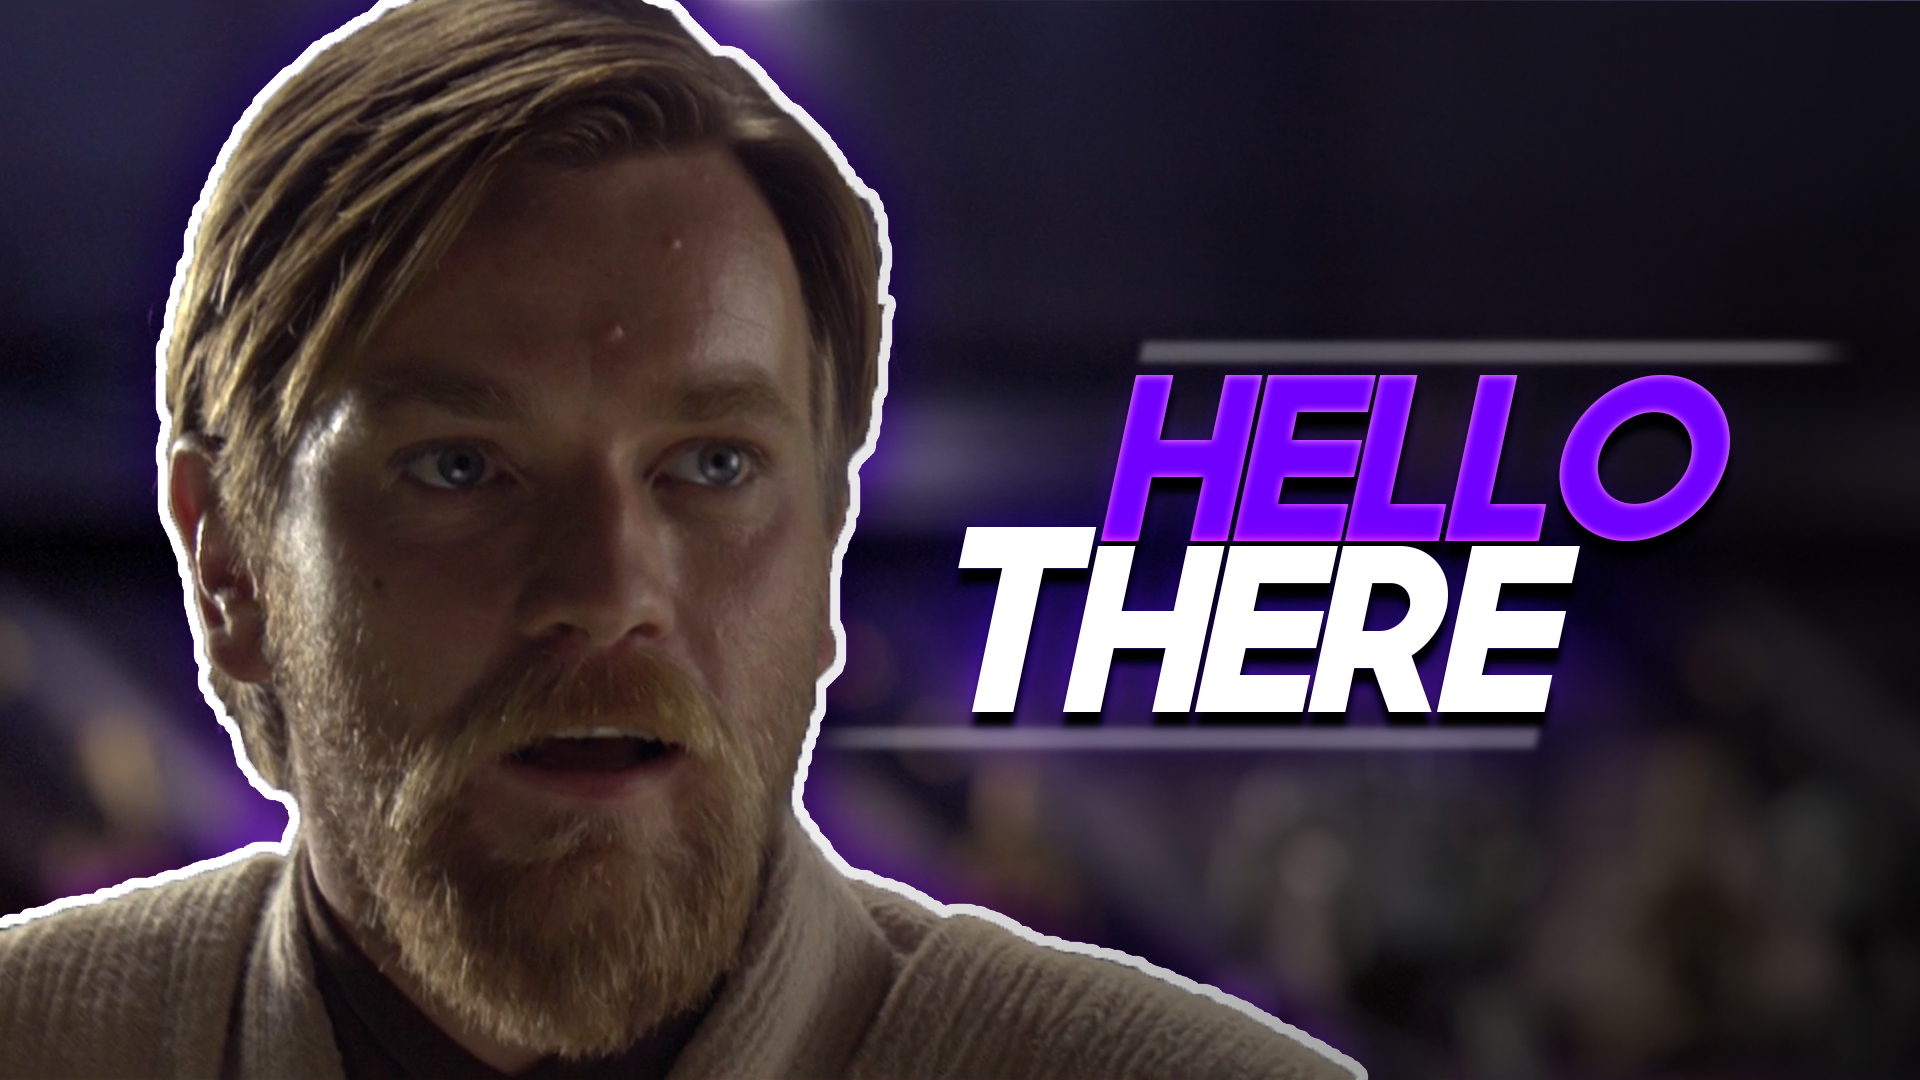 General 1920x1080 Star Wars: Episode III - The Revenge of the Sith Obi-Wan Kenobi Jedi memes quote text digital art